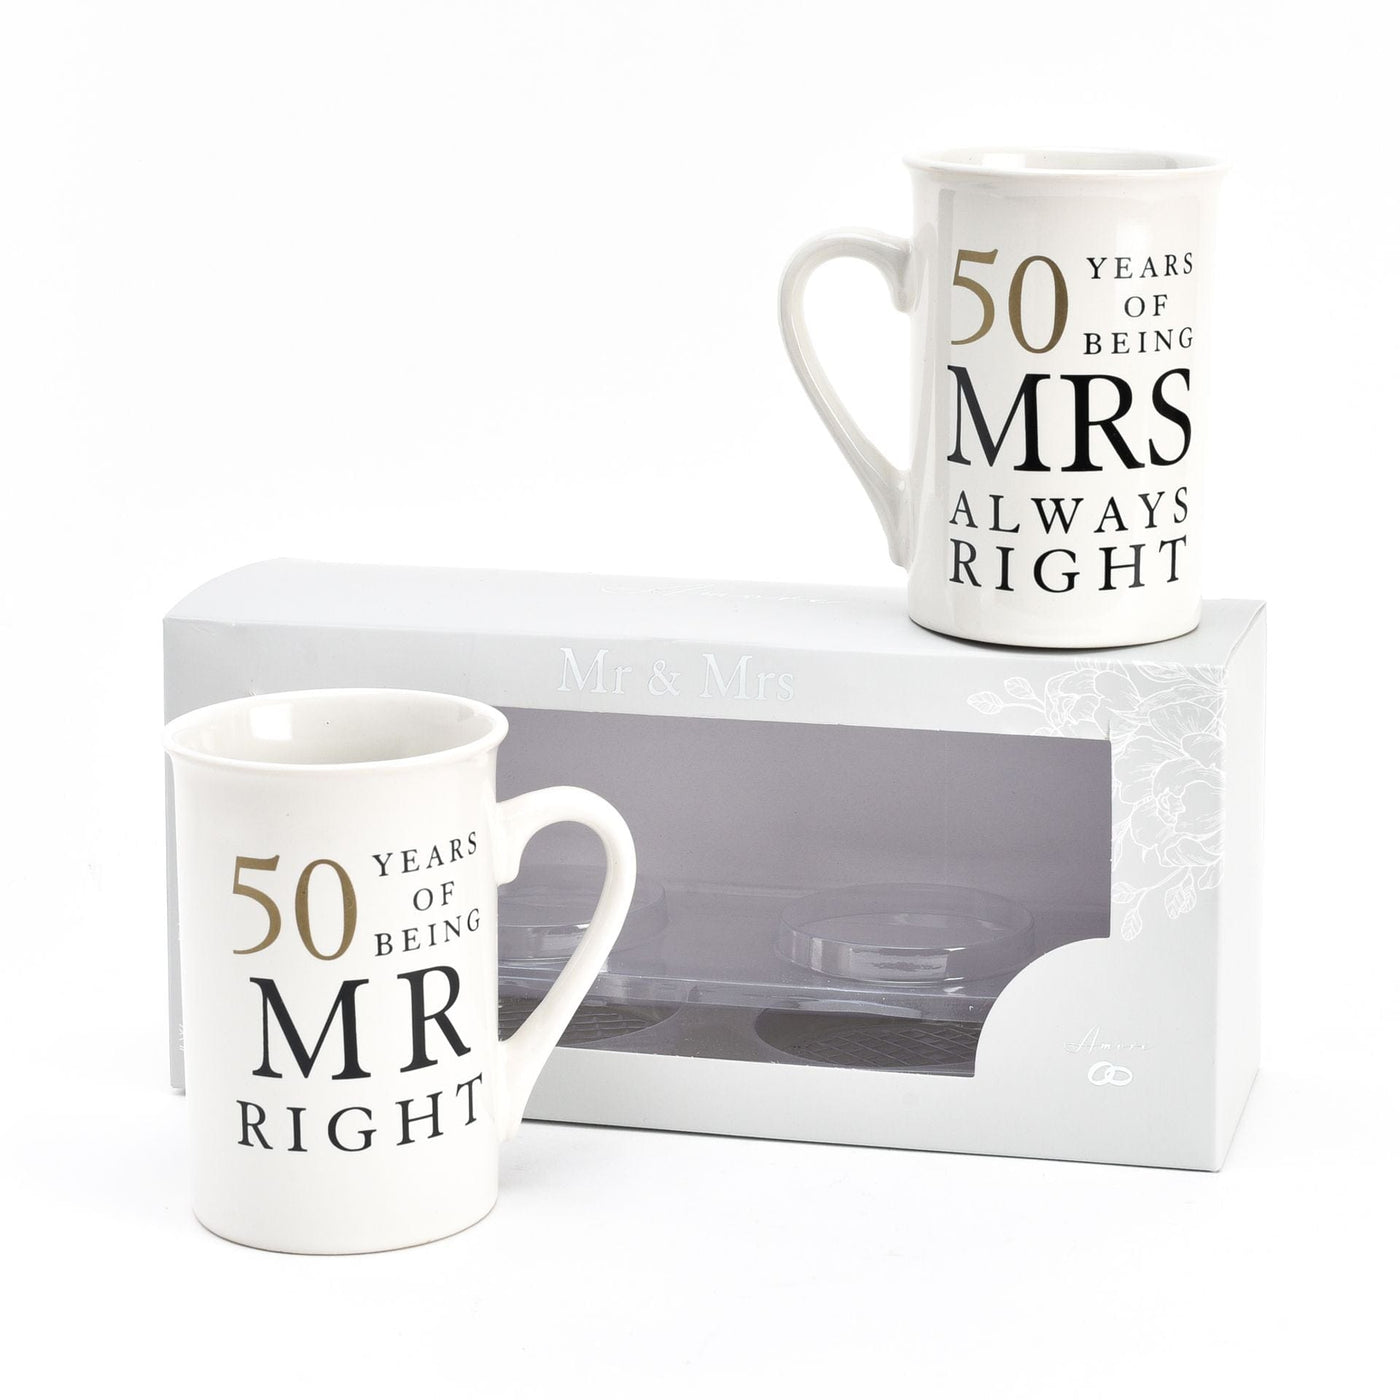 Widdop Gifts Mugs & Drinkware 50th Wedding Anniversary Mr and Mrs Right Mugs